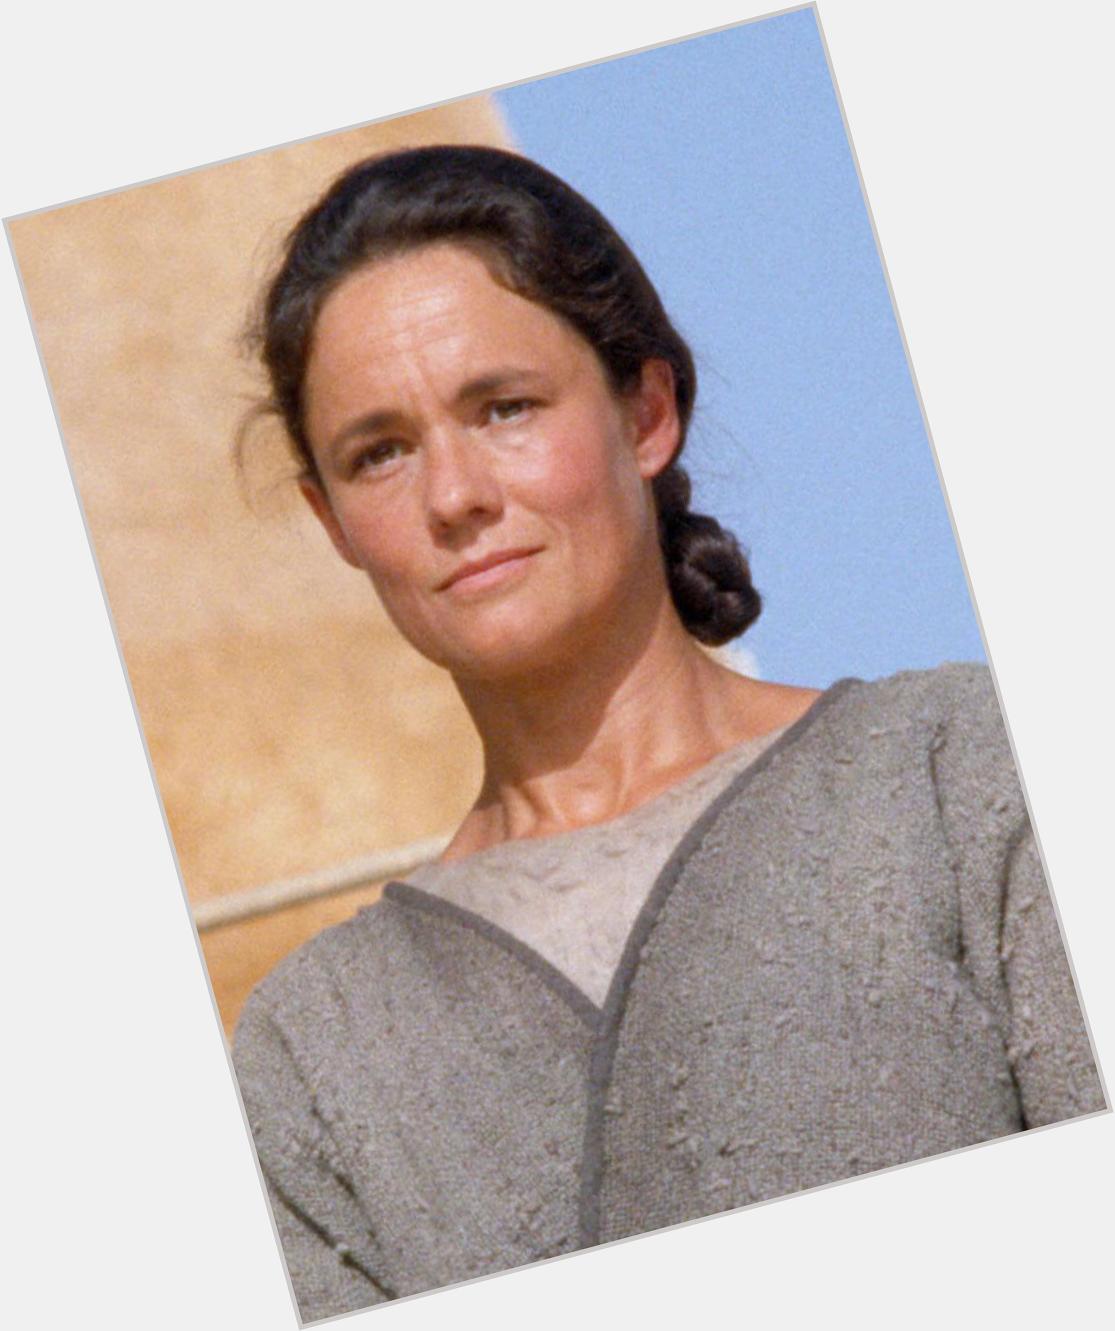 Happy birthday to Pernilla August!!
Who played Shmi Skywalker.

Born: February 13th, 1958 